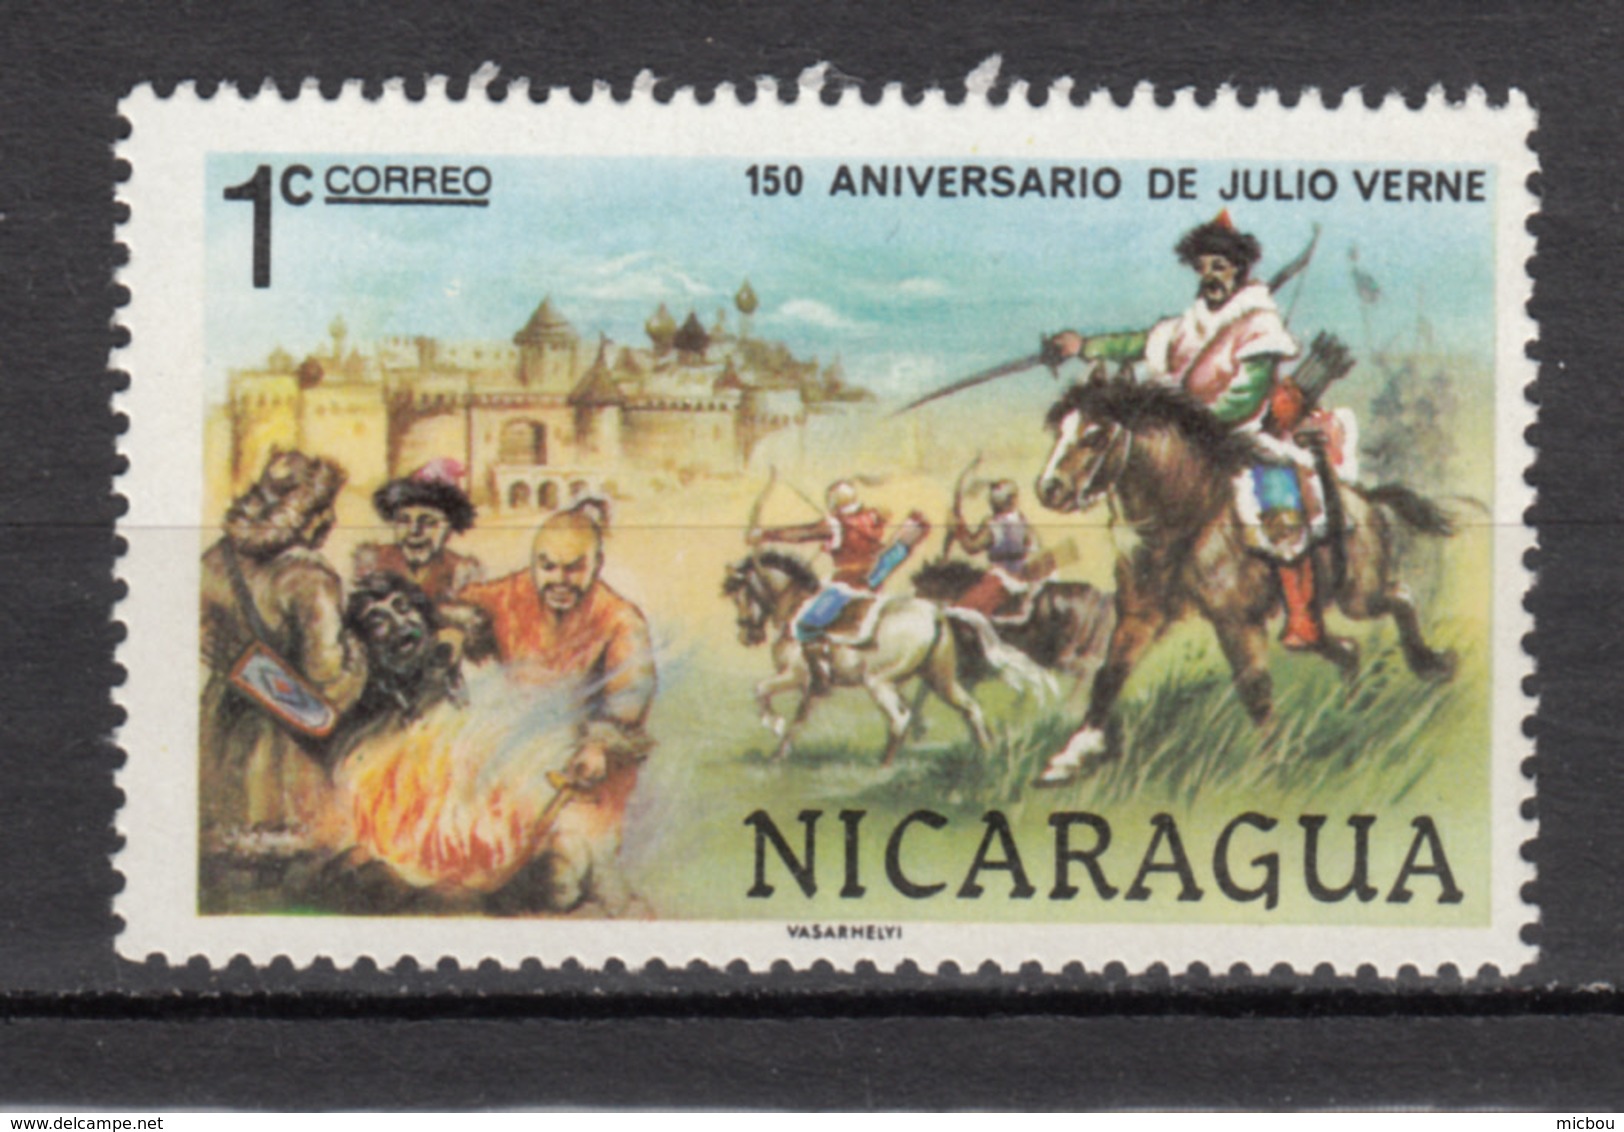 Nicaragua, Tir à L'arc, Archery, Cheval, Horse, Feu, Fire, Jules Verne, écrivain, Writter, Feu, Fire - Tir à L'Arc